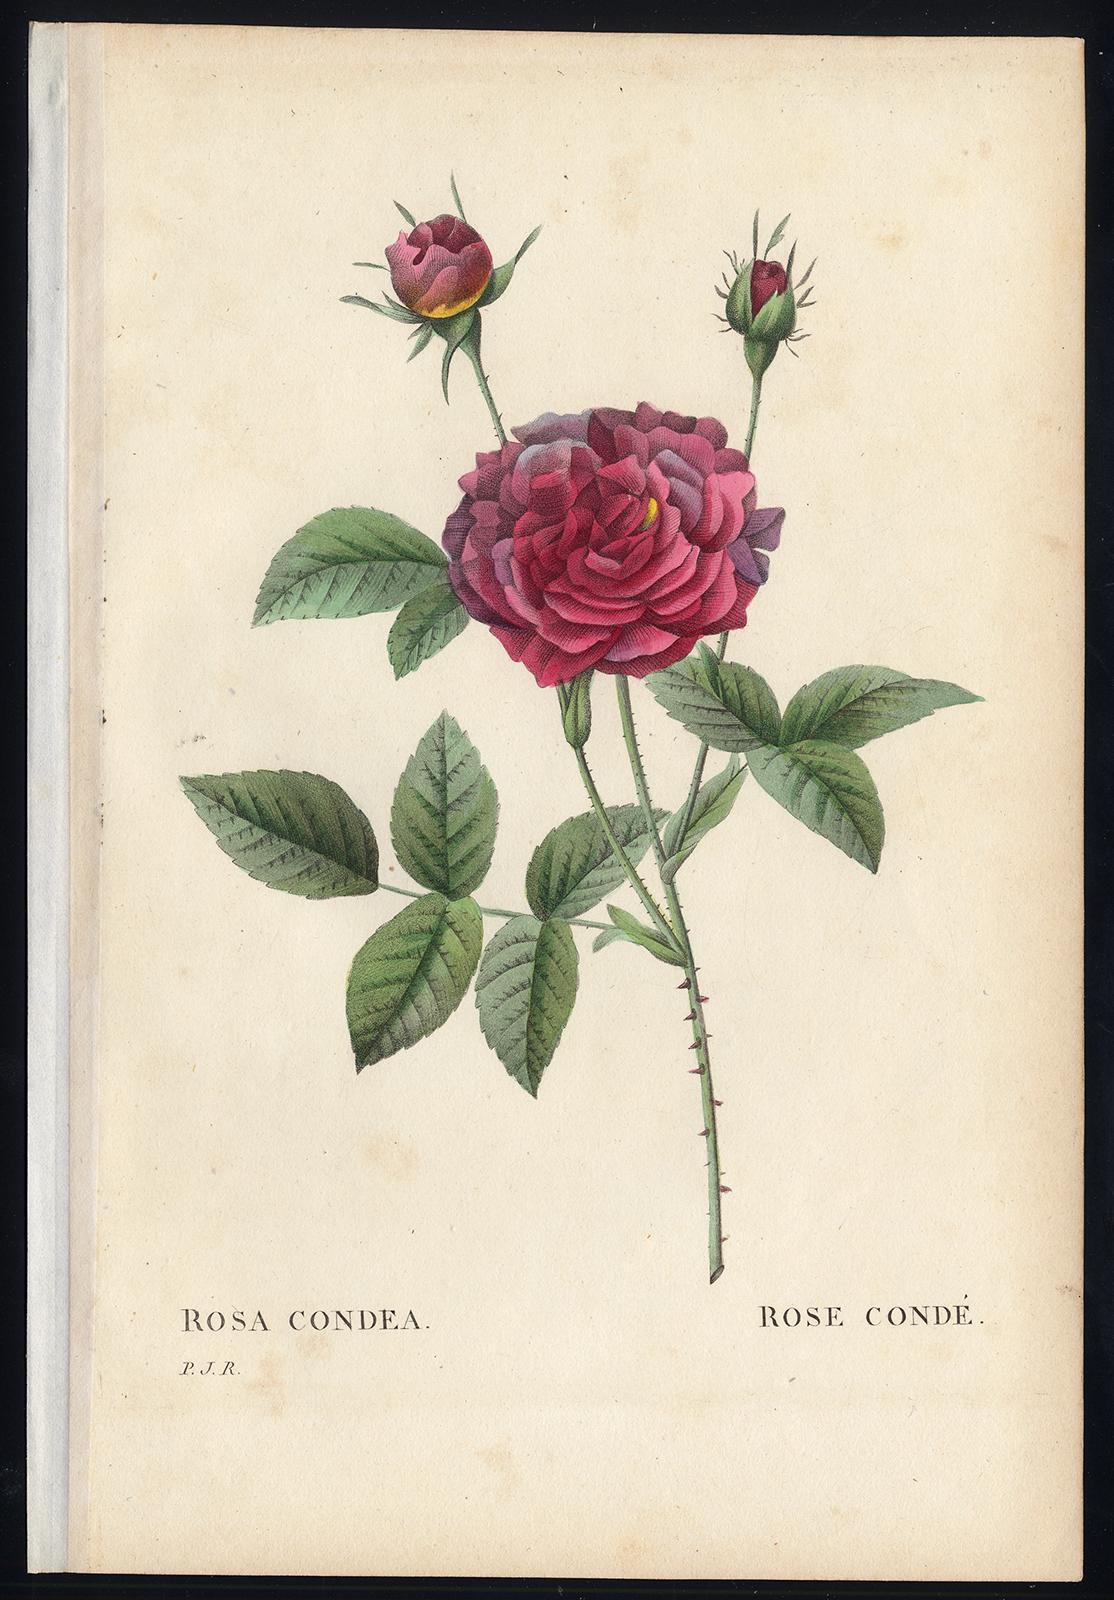 Pierre-Joseph Redouté Print - Rosa Condea by Redoute - Les Roses - Handcoloured engraving - 19th century